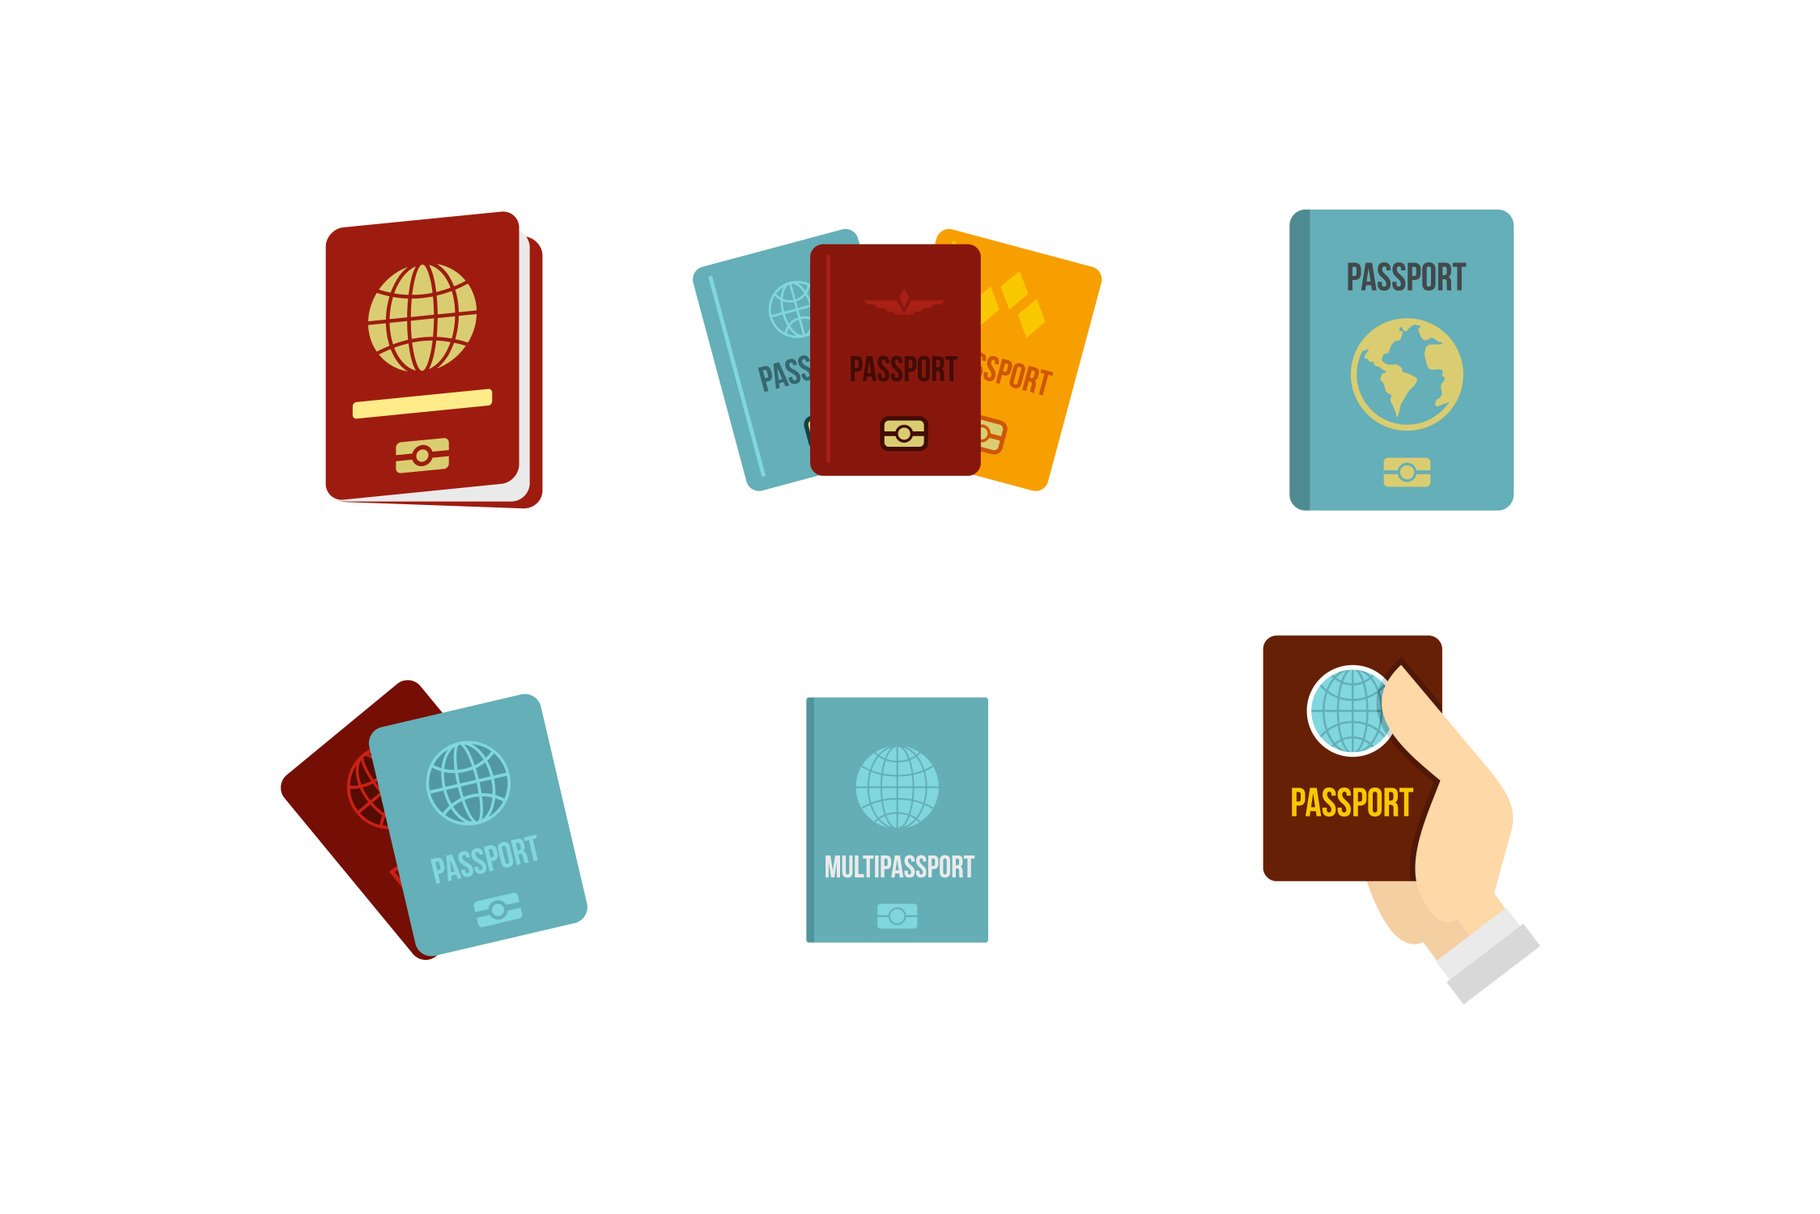 Passport icon set, flat style cover image.